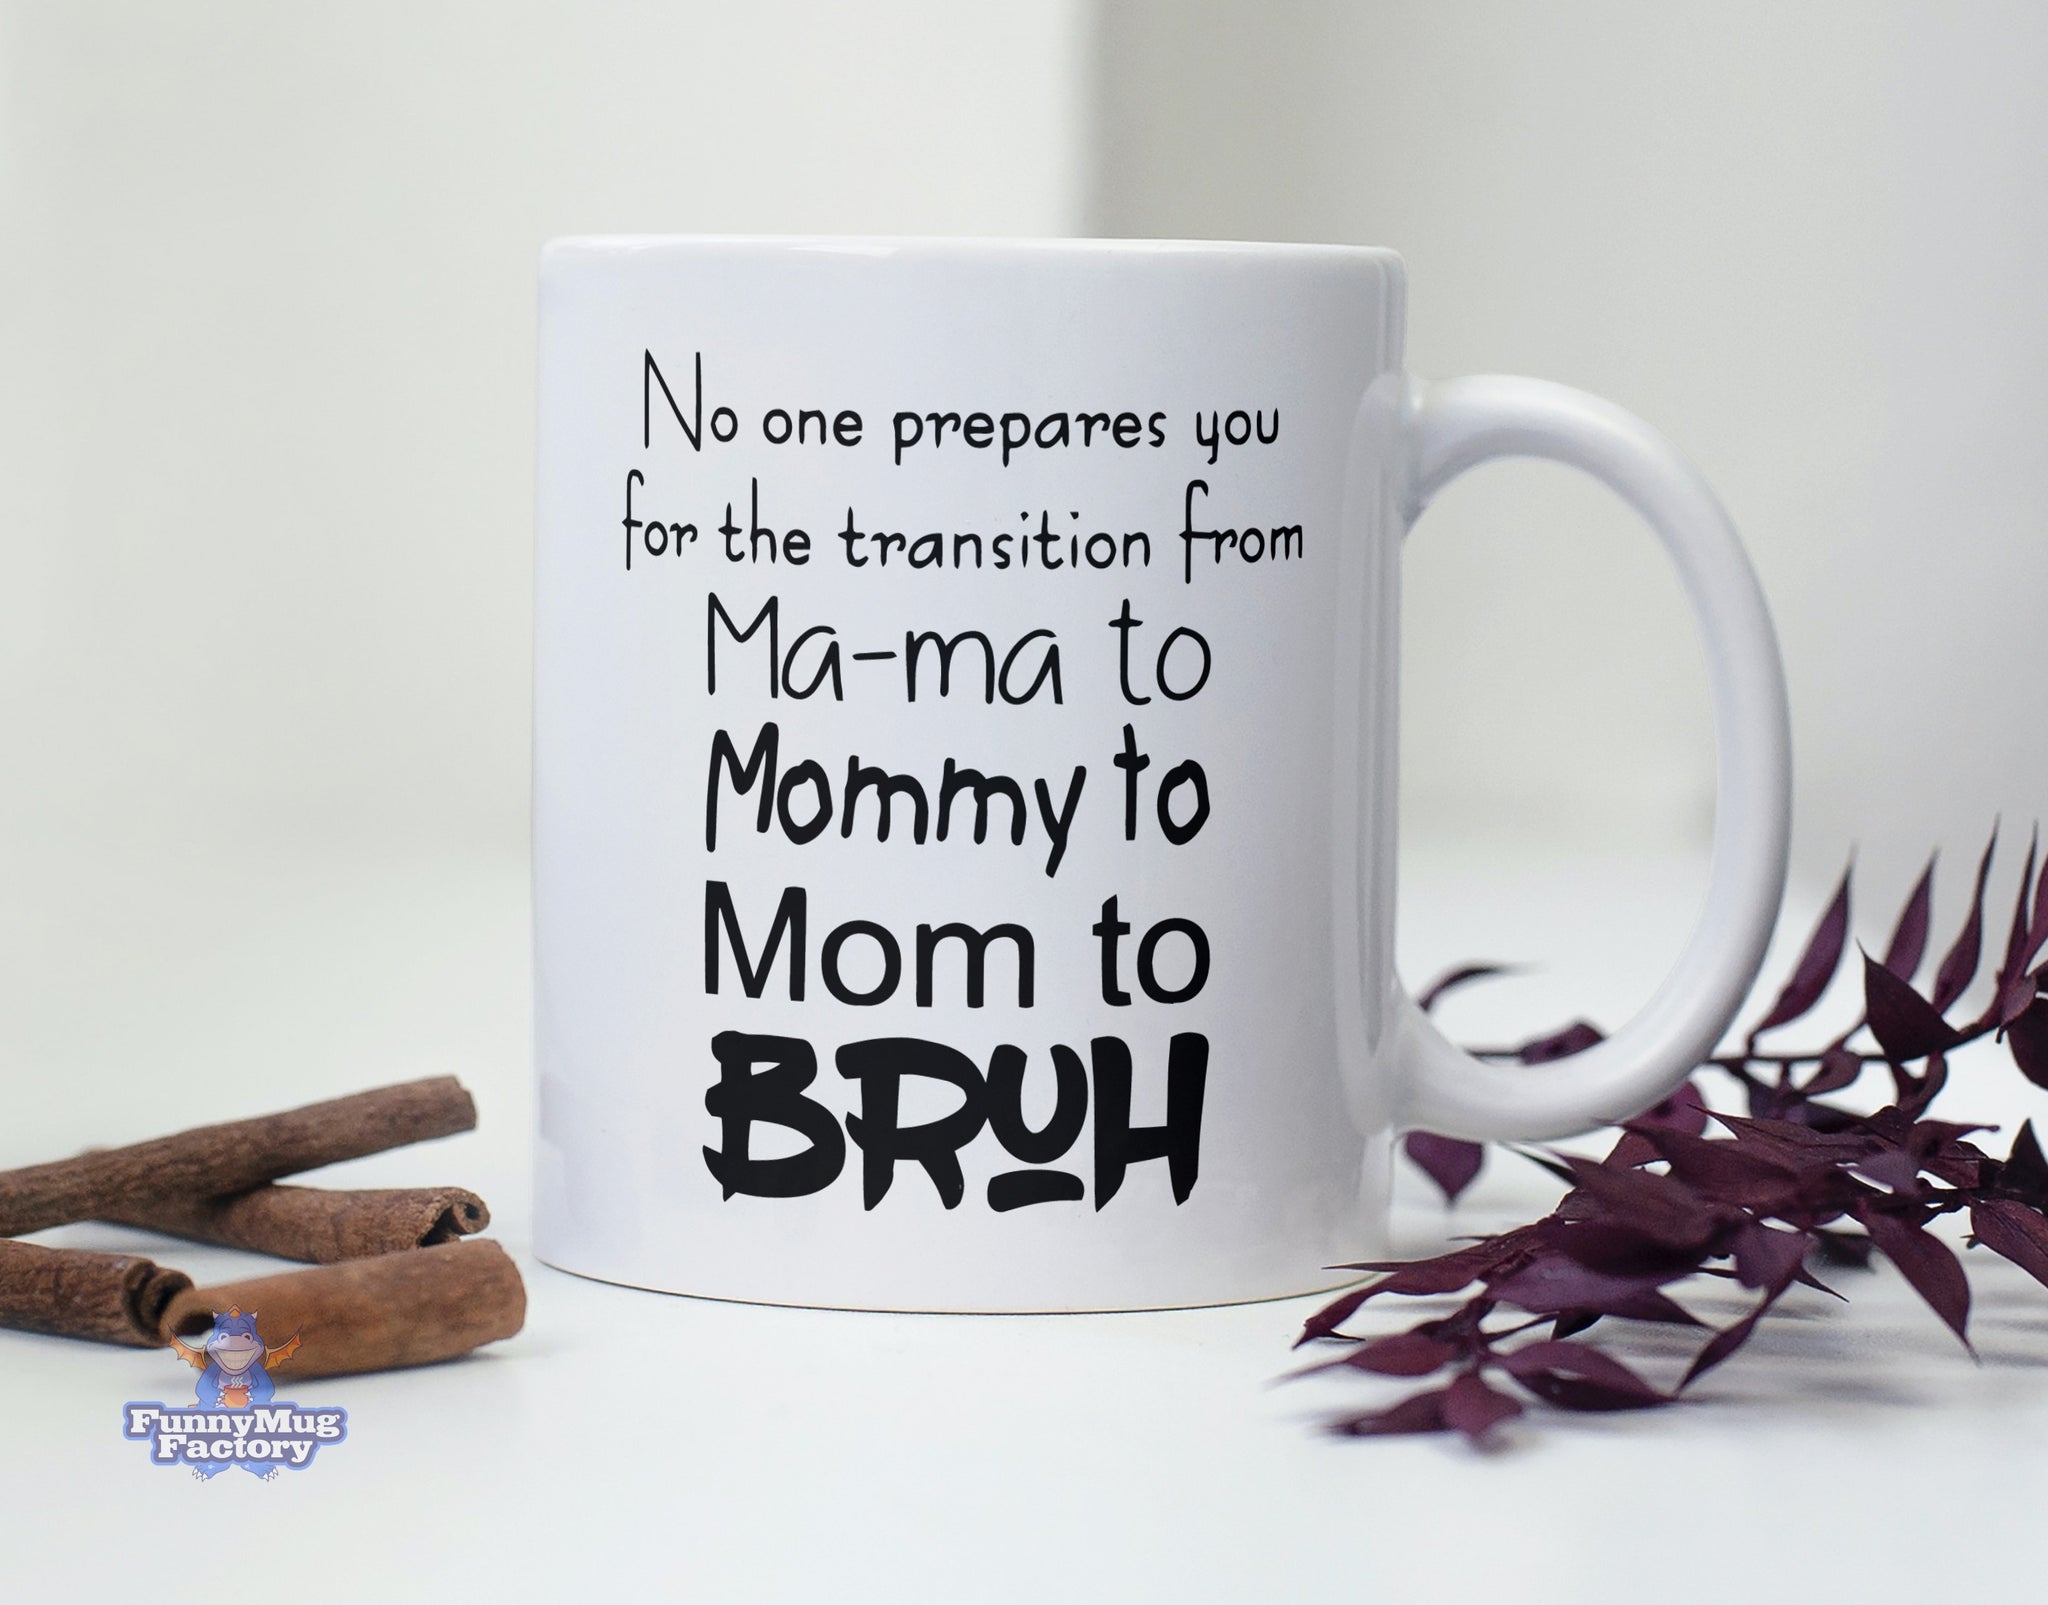 Mama Mommy Mom Bruh Coffee Mug by Made for Mama Shop